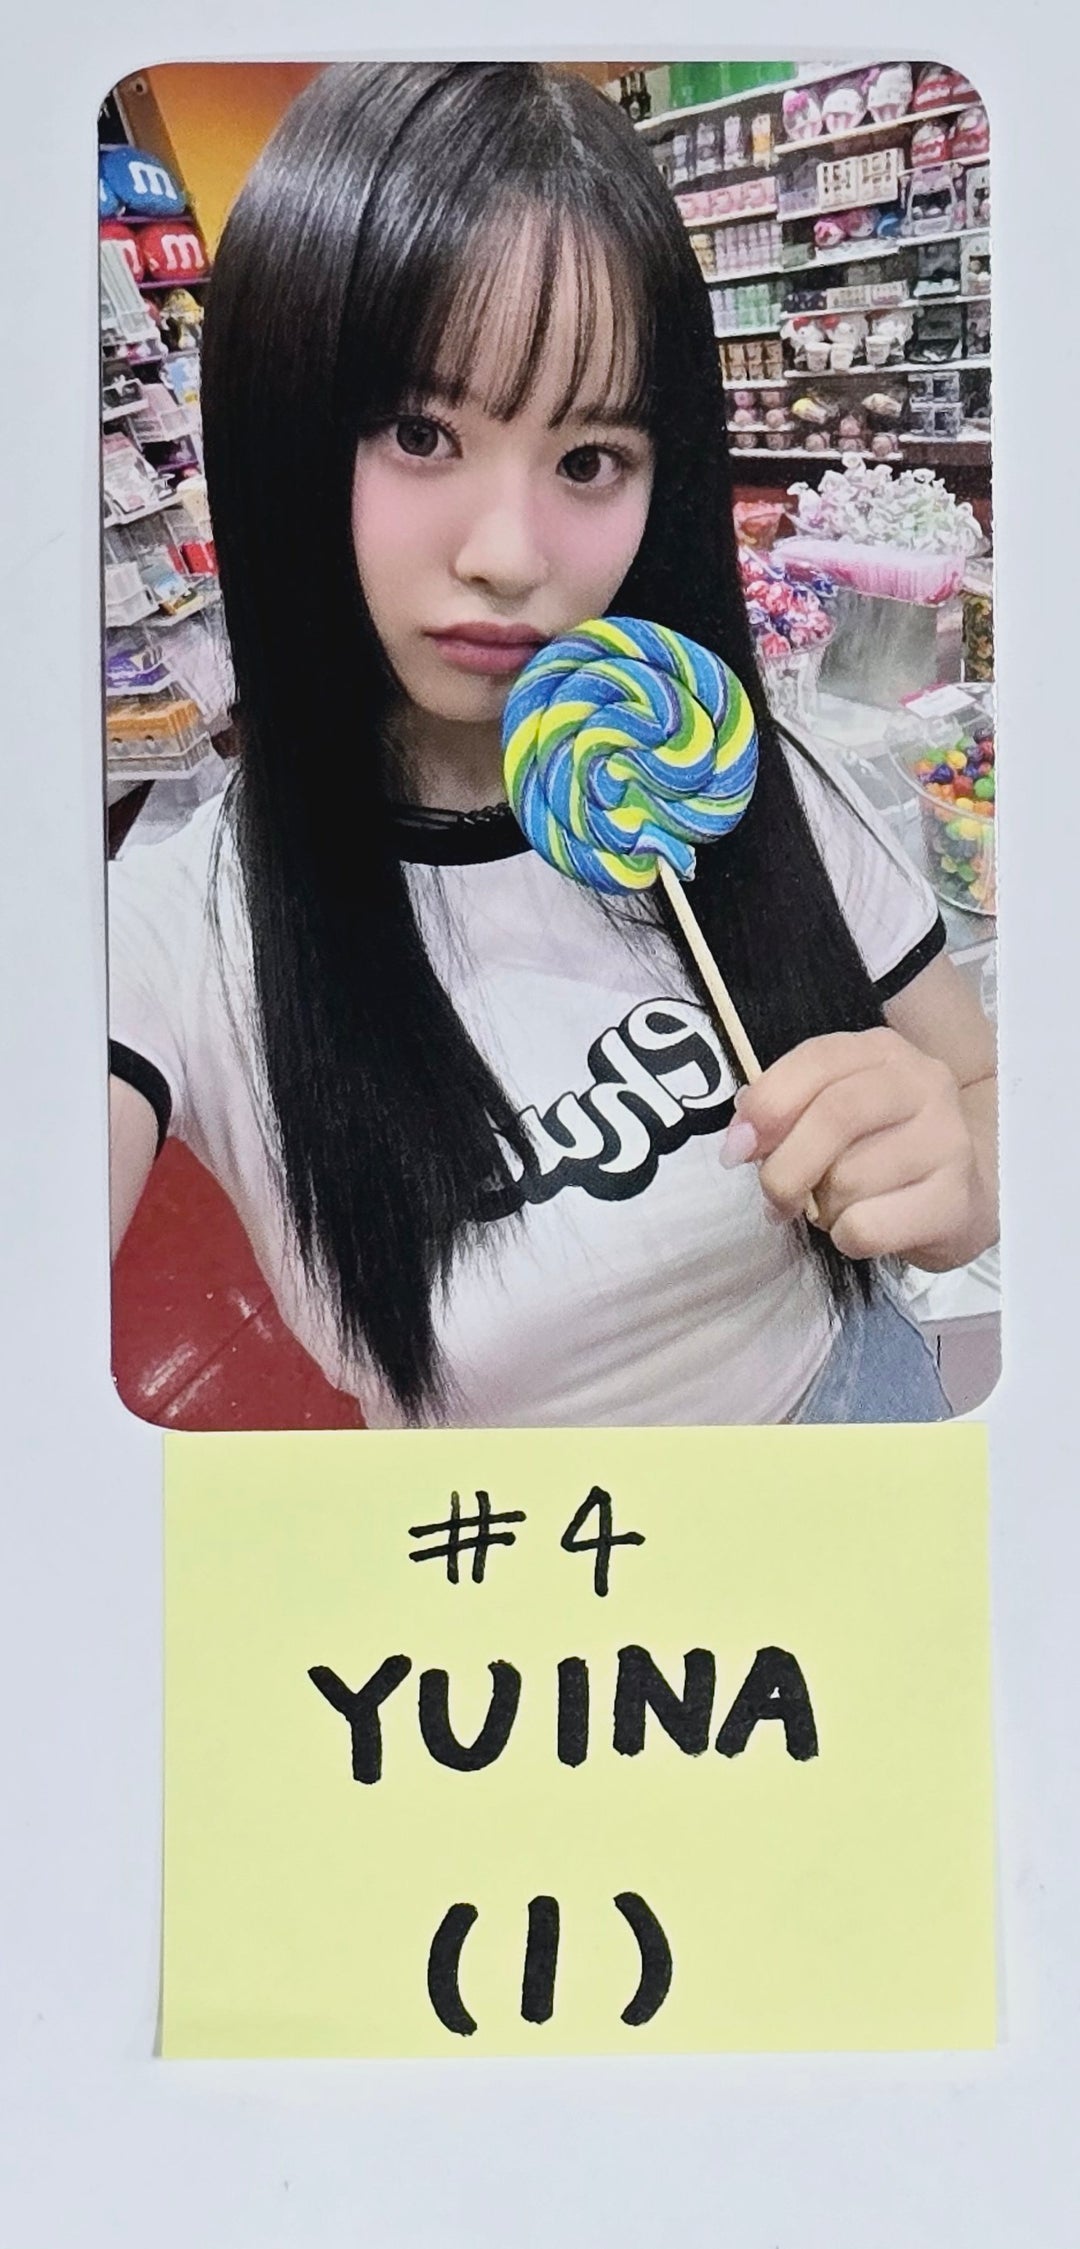 Candy Shop "Hashtag#" - Official Photocard, Polaroid Photo  [24.4.8]